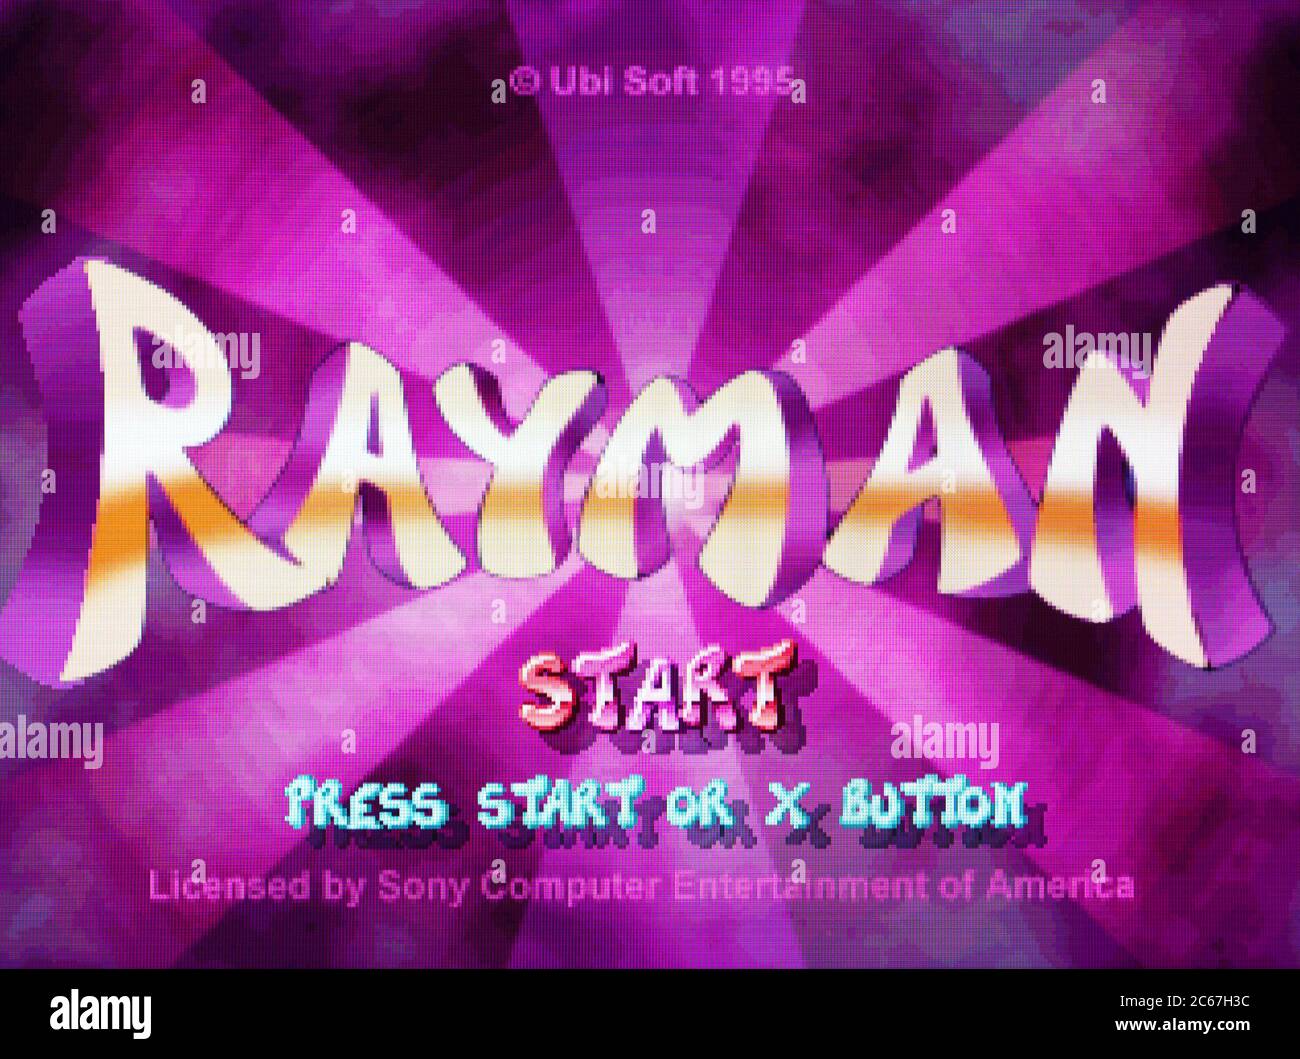 Rayman Brain Games (USA) : Ubi Soft Entertainment Software : Free